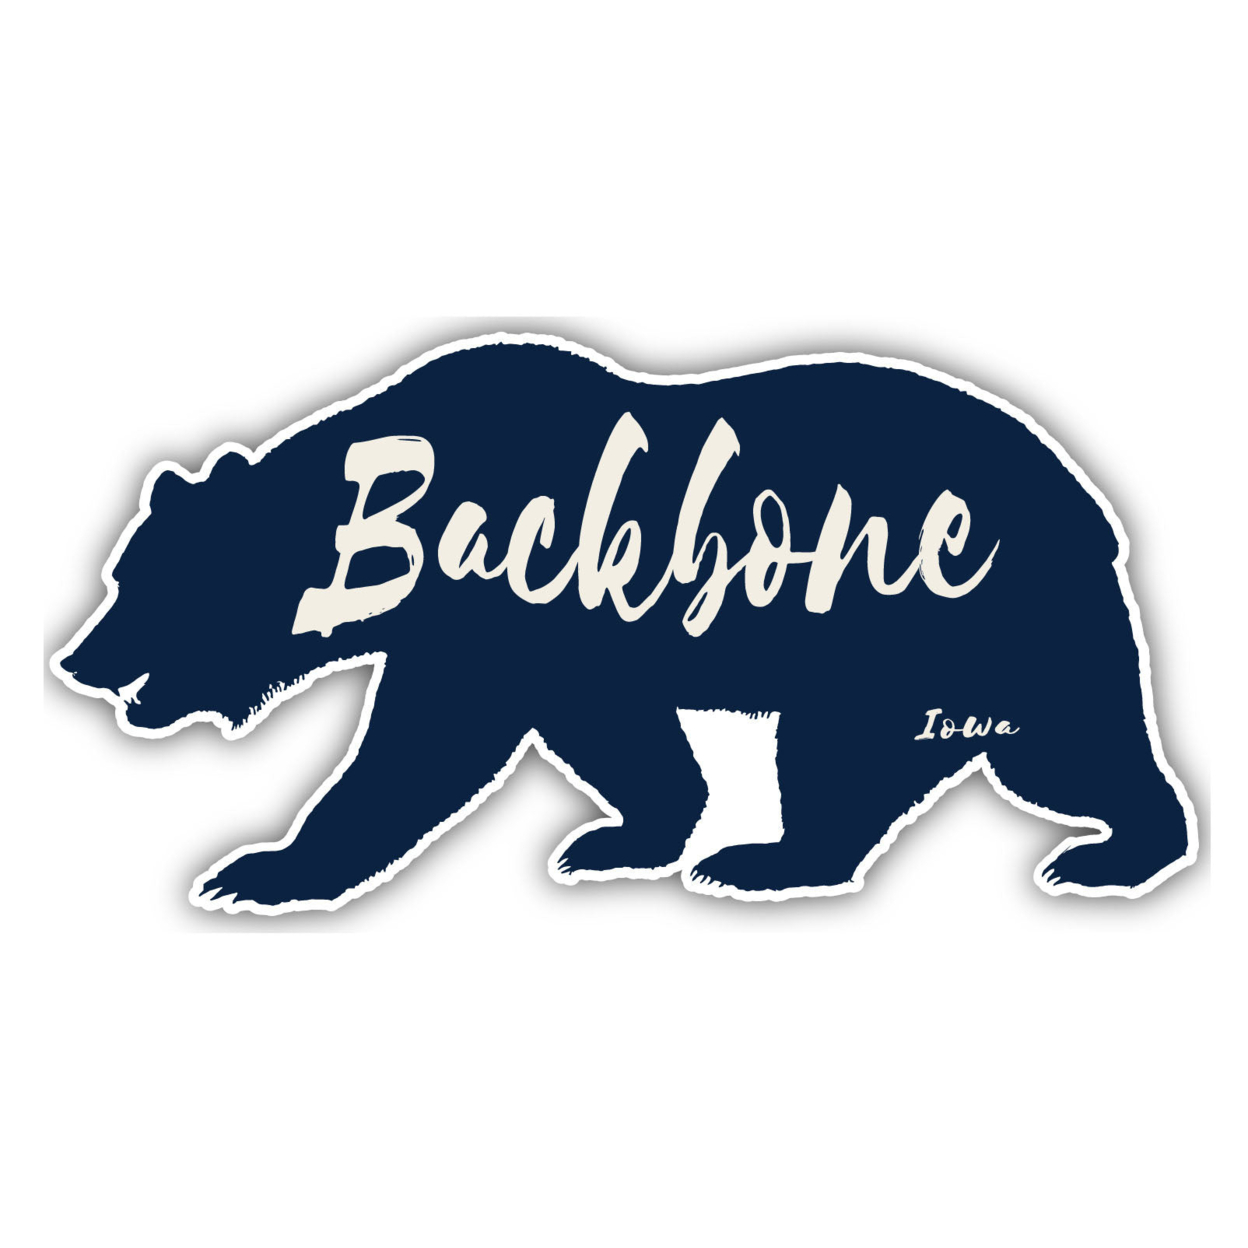 Backbone Iowa Souvenir Decorative Stickers (Choose Theme And Size) - Single Unit, 12-Inch, Bear